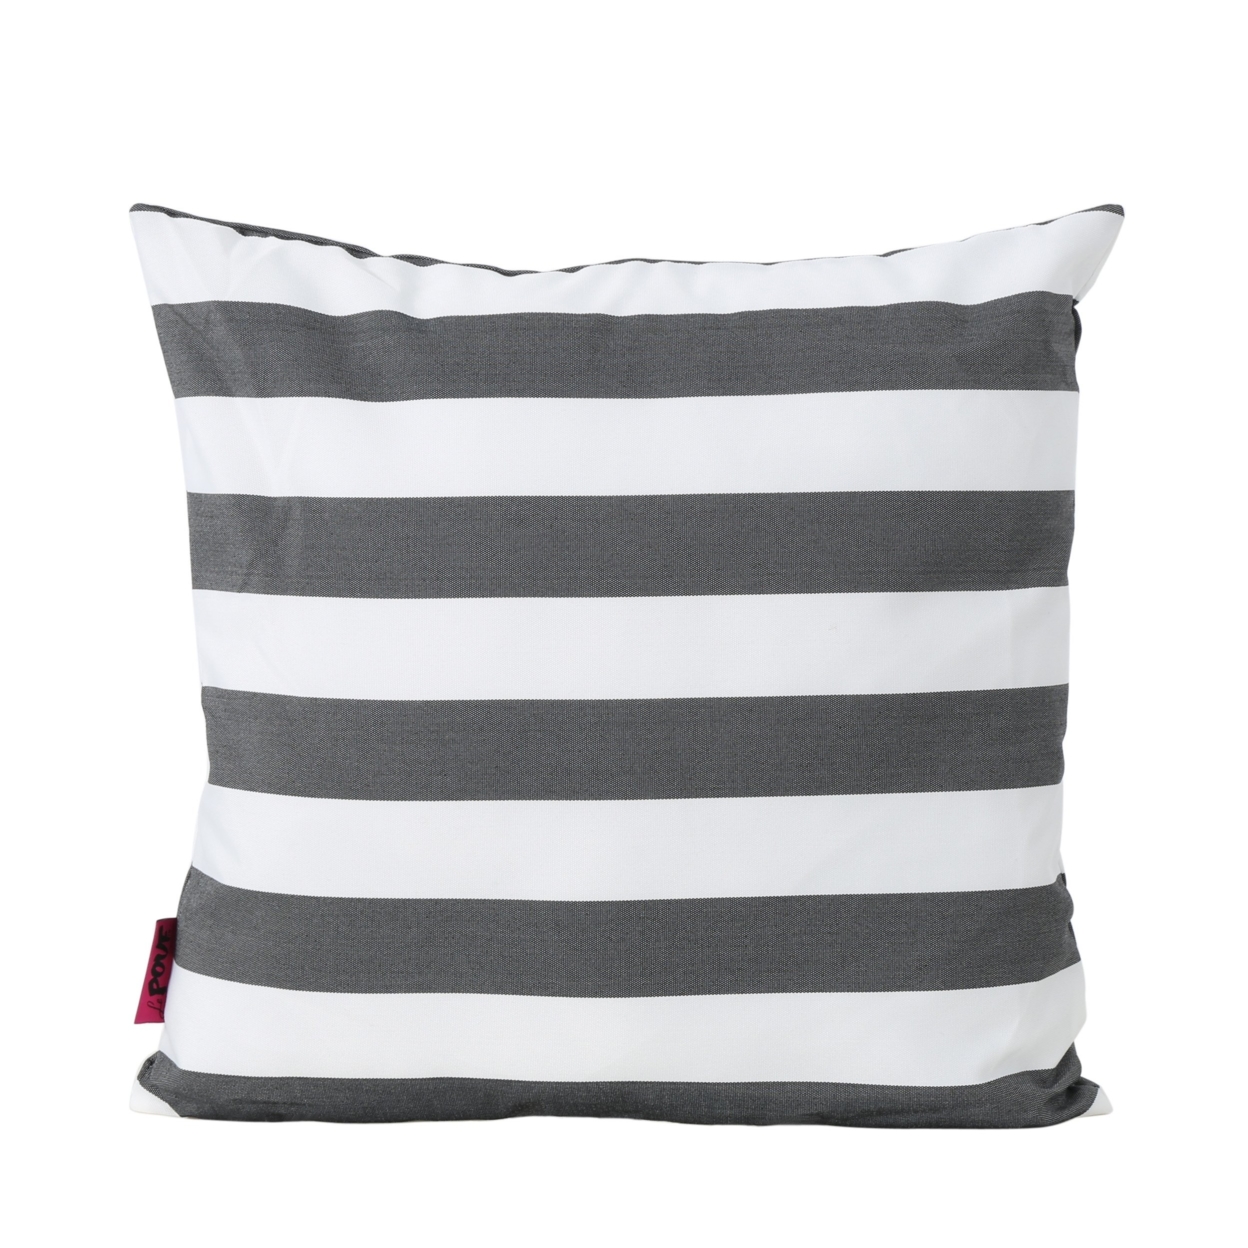 La Mesa Indoor Striped Water Resistant Square Throw Pillow - Black/white, Single